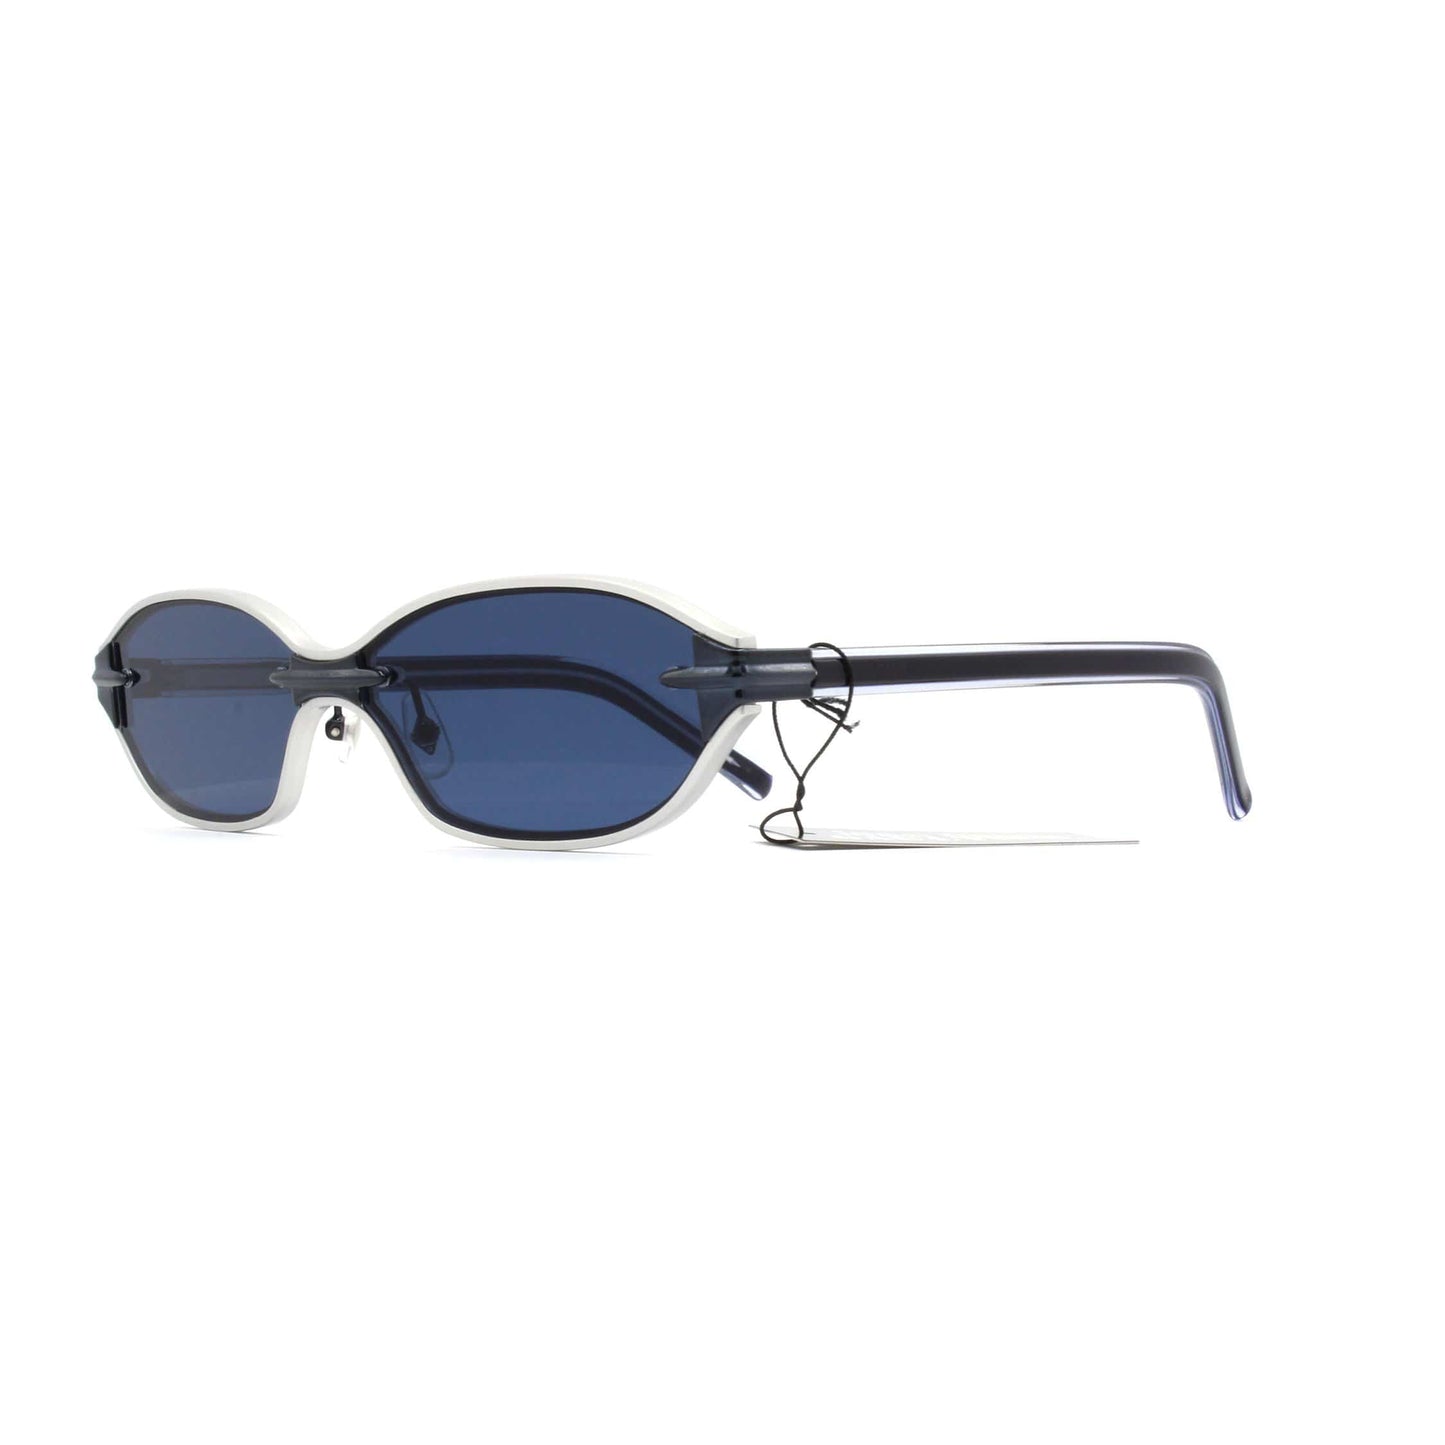 Silver Vintage Jean Paul Gaultier 56-0040 Sunglasses RSTKD Vintage